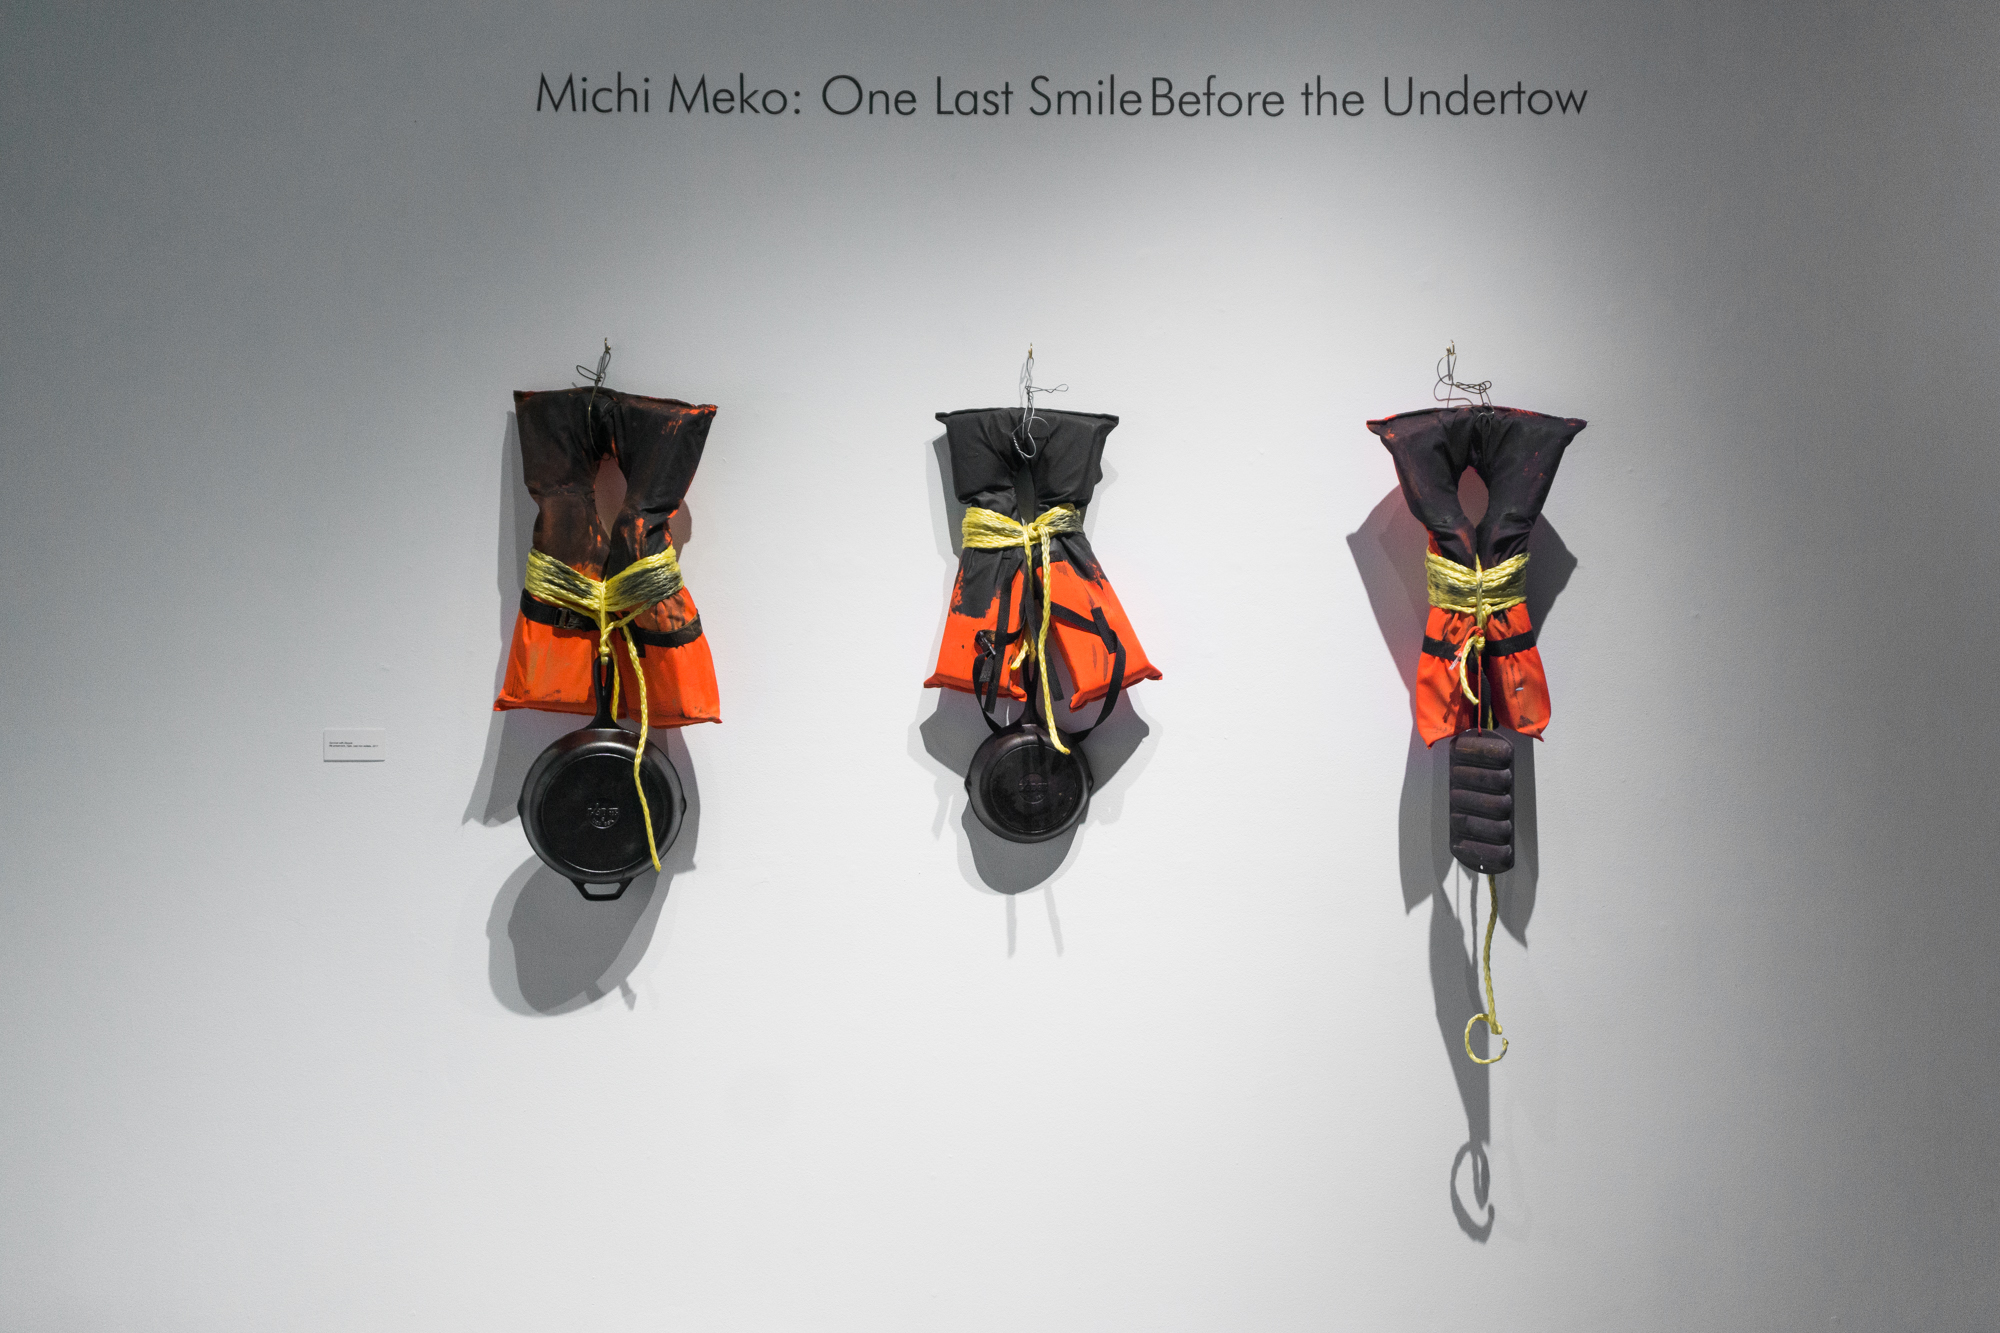 Michi Meko, "One Last Smile Before the Undertow," 2017, installation image